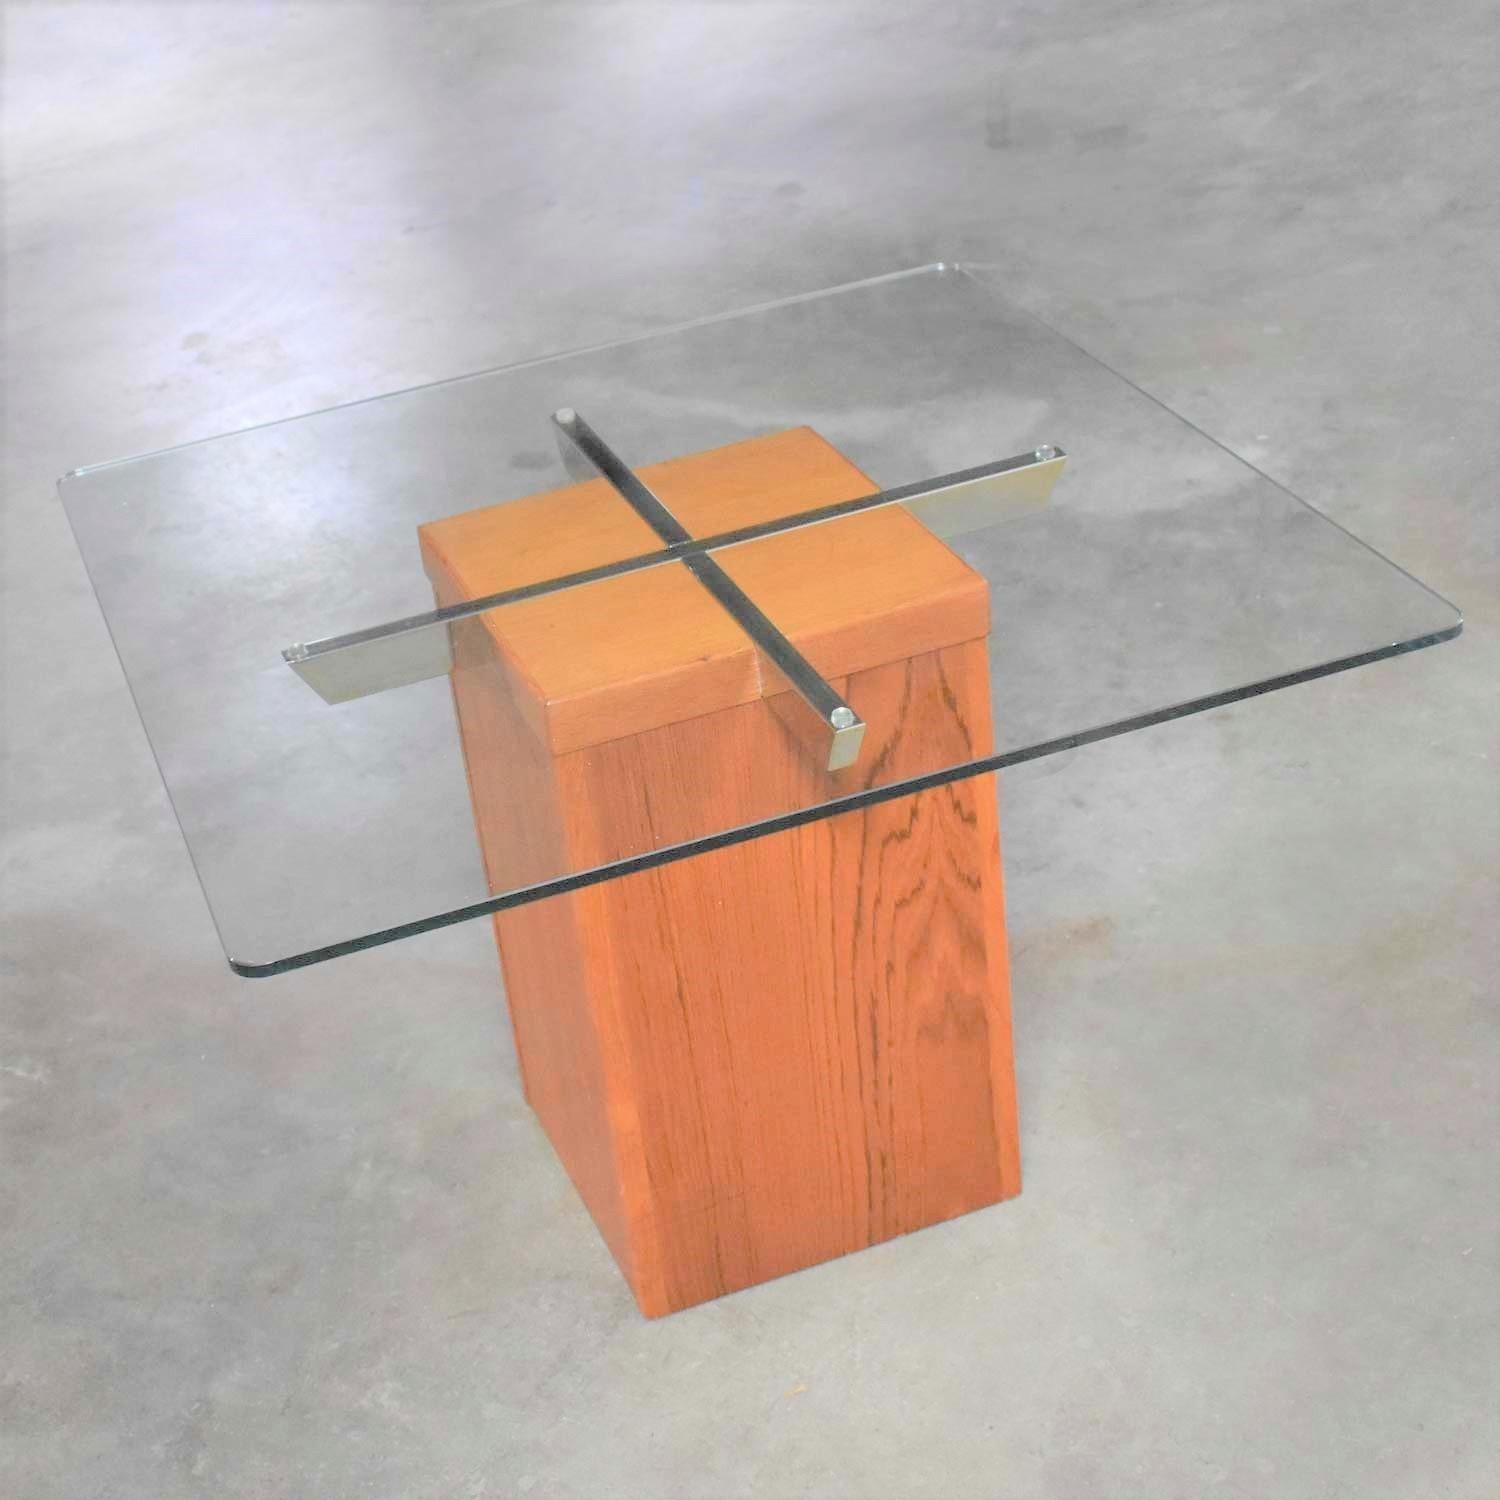 Danish Midcentury Scandinavian Modern Square Teak Chrome and Glass Side Table